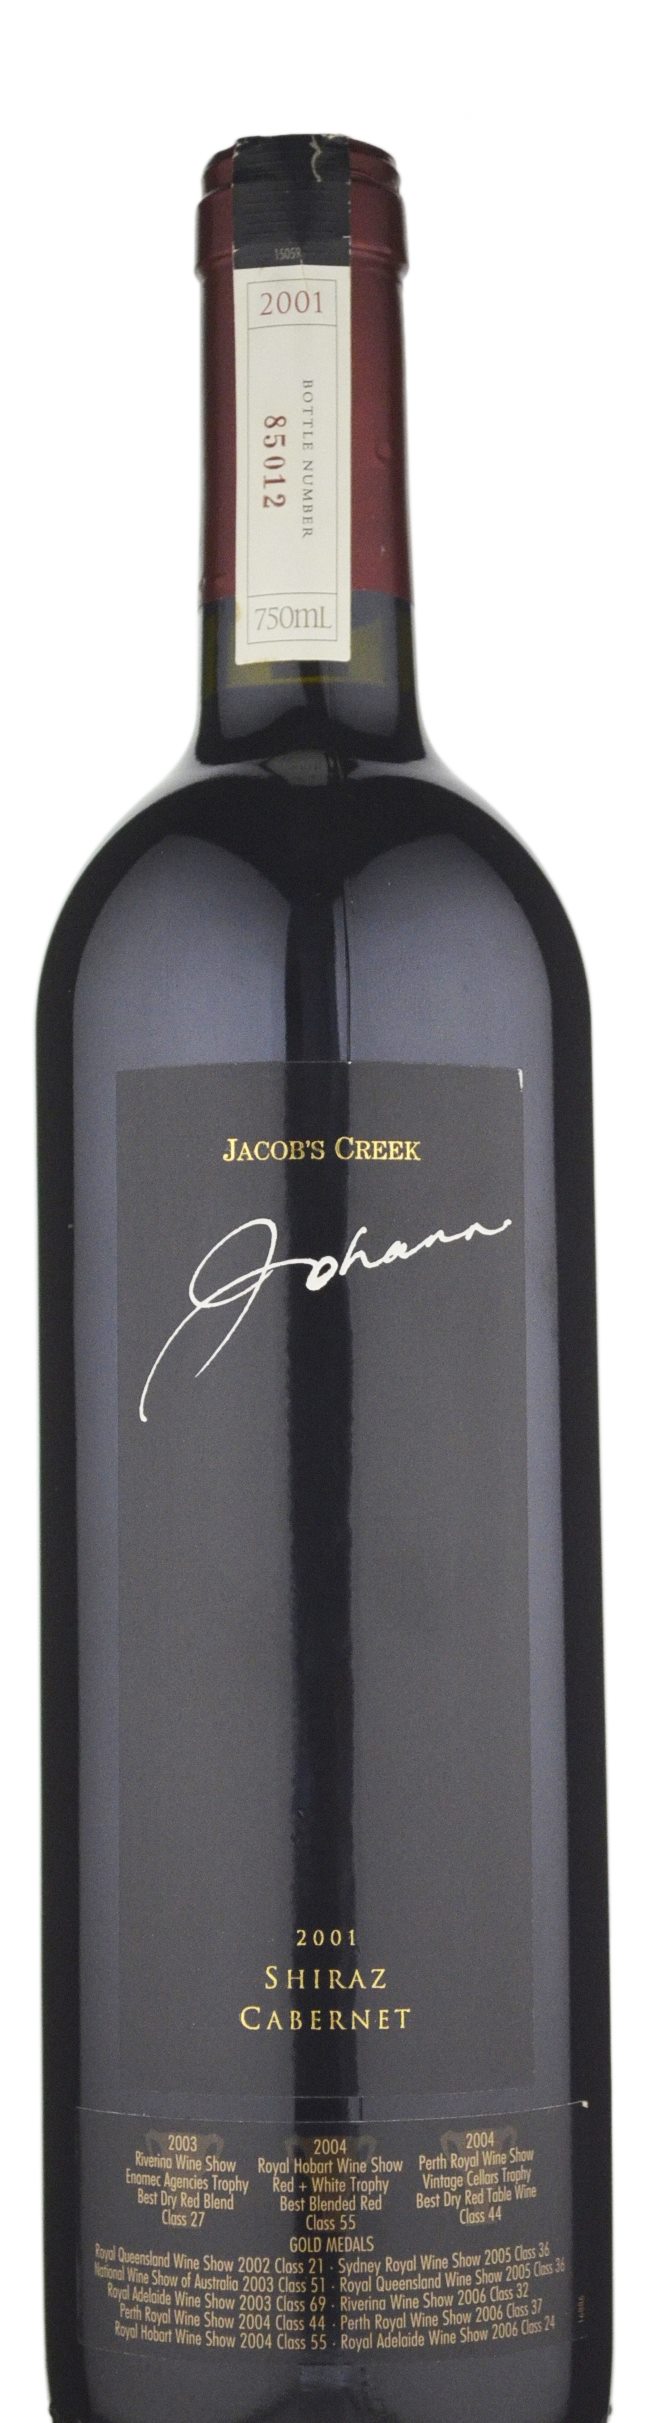 Jacob's Creek Johann Shiraz Cabernet 2001